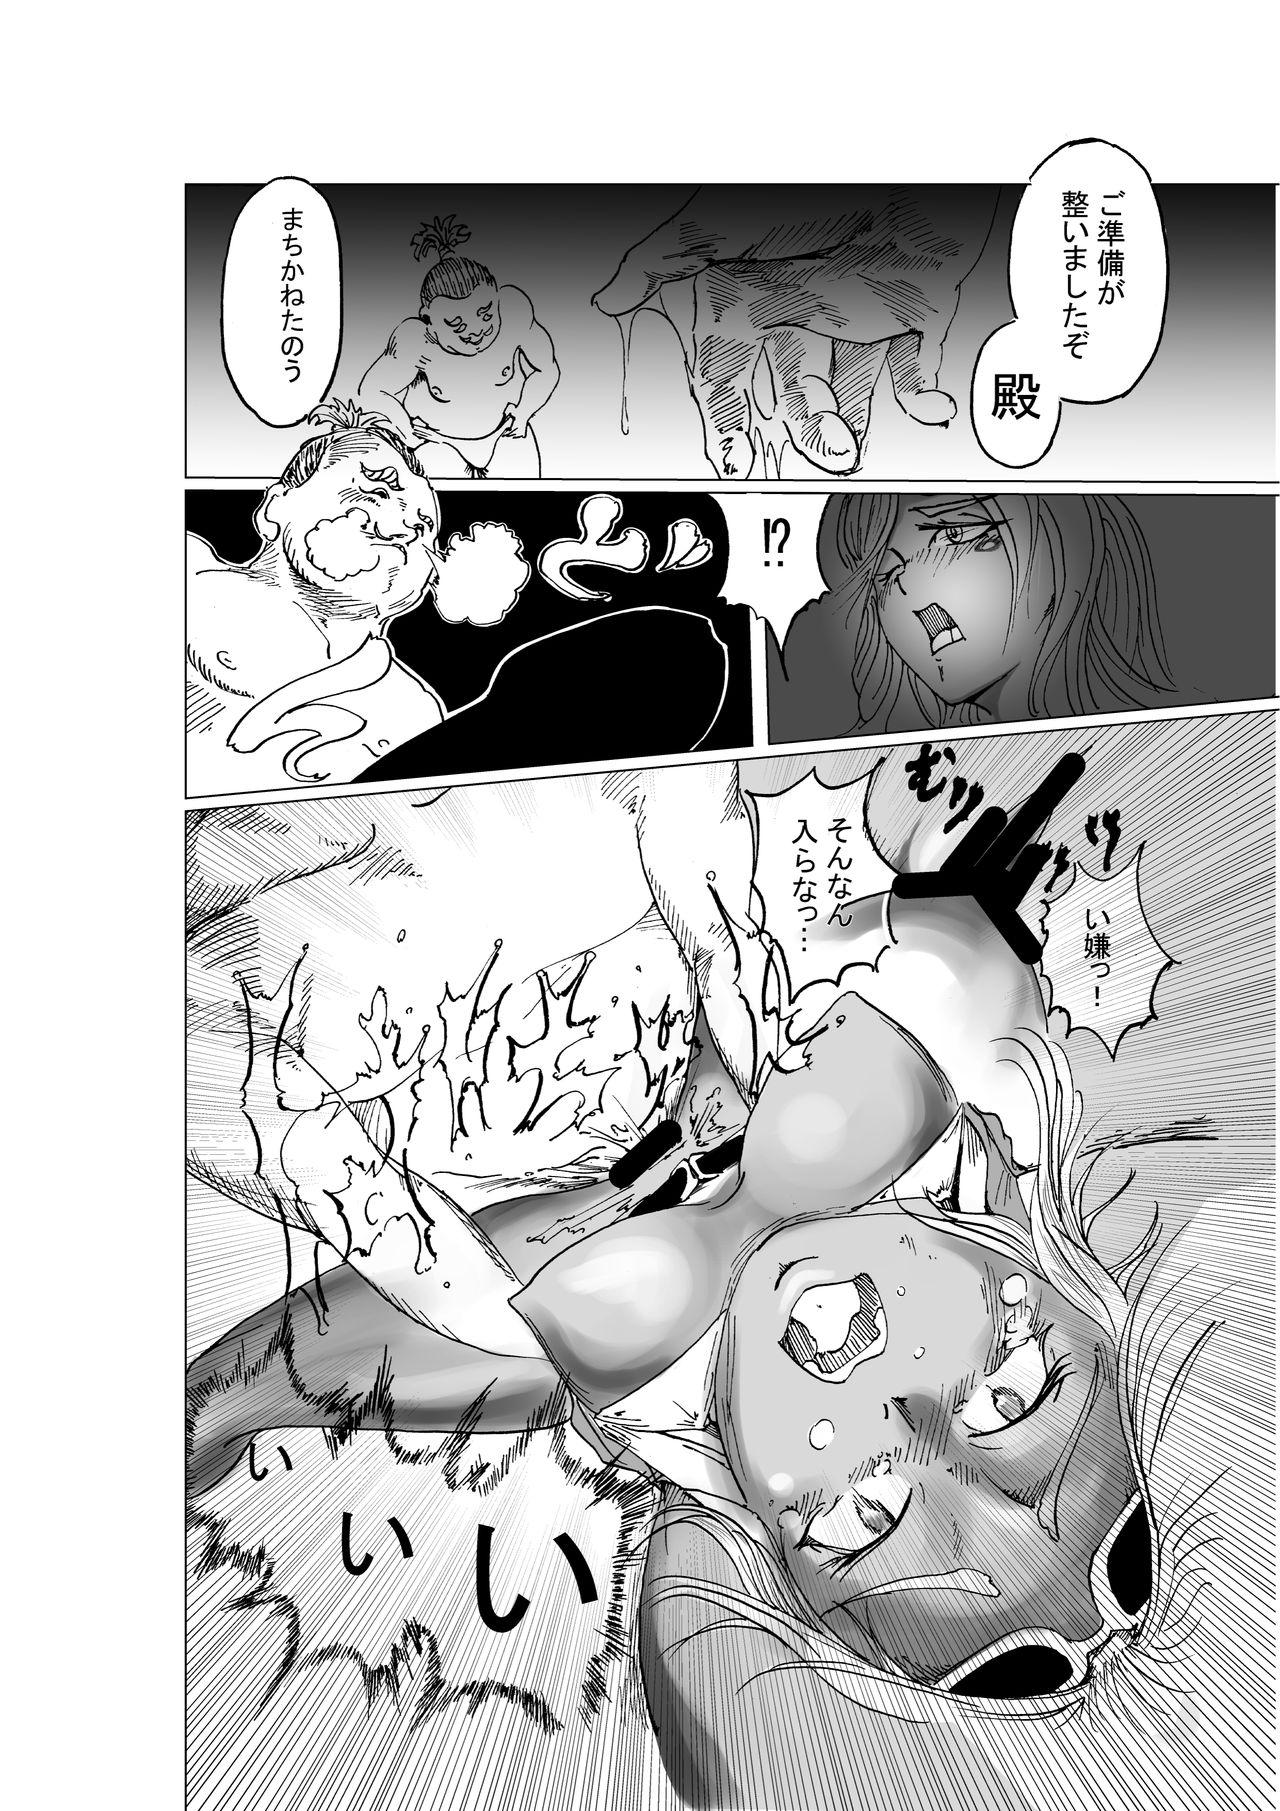 Rub 黒忍アゲハ - Original Forwomen - Page 6